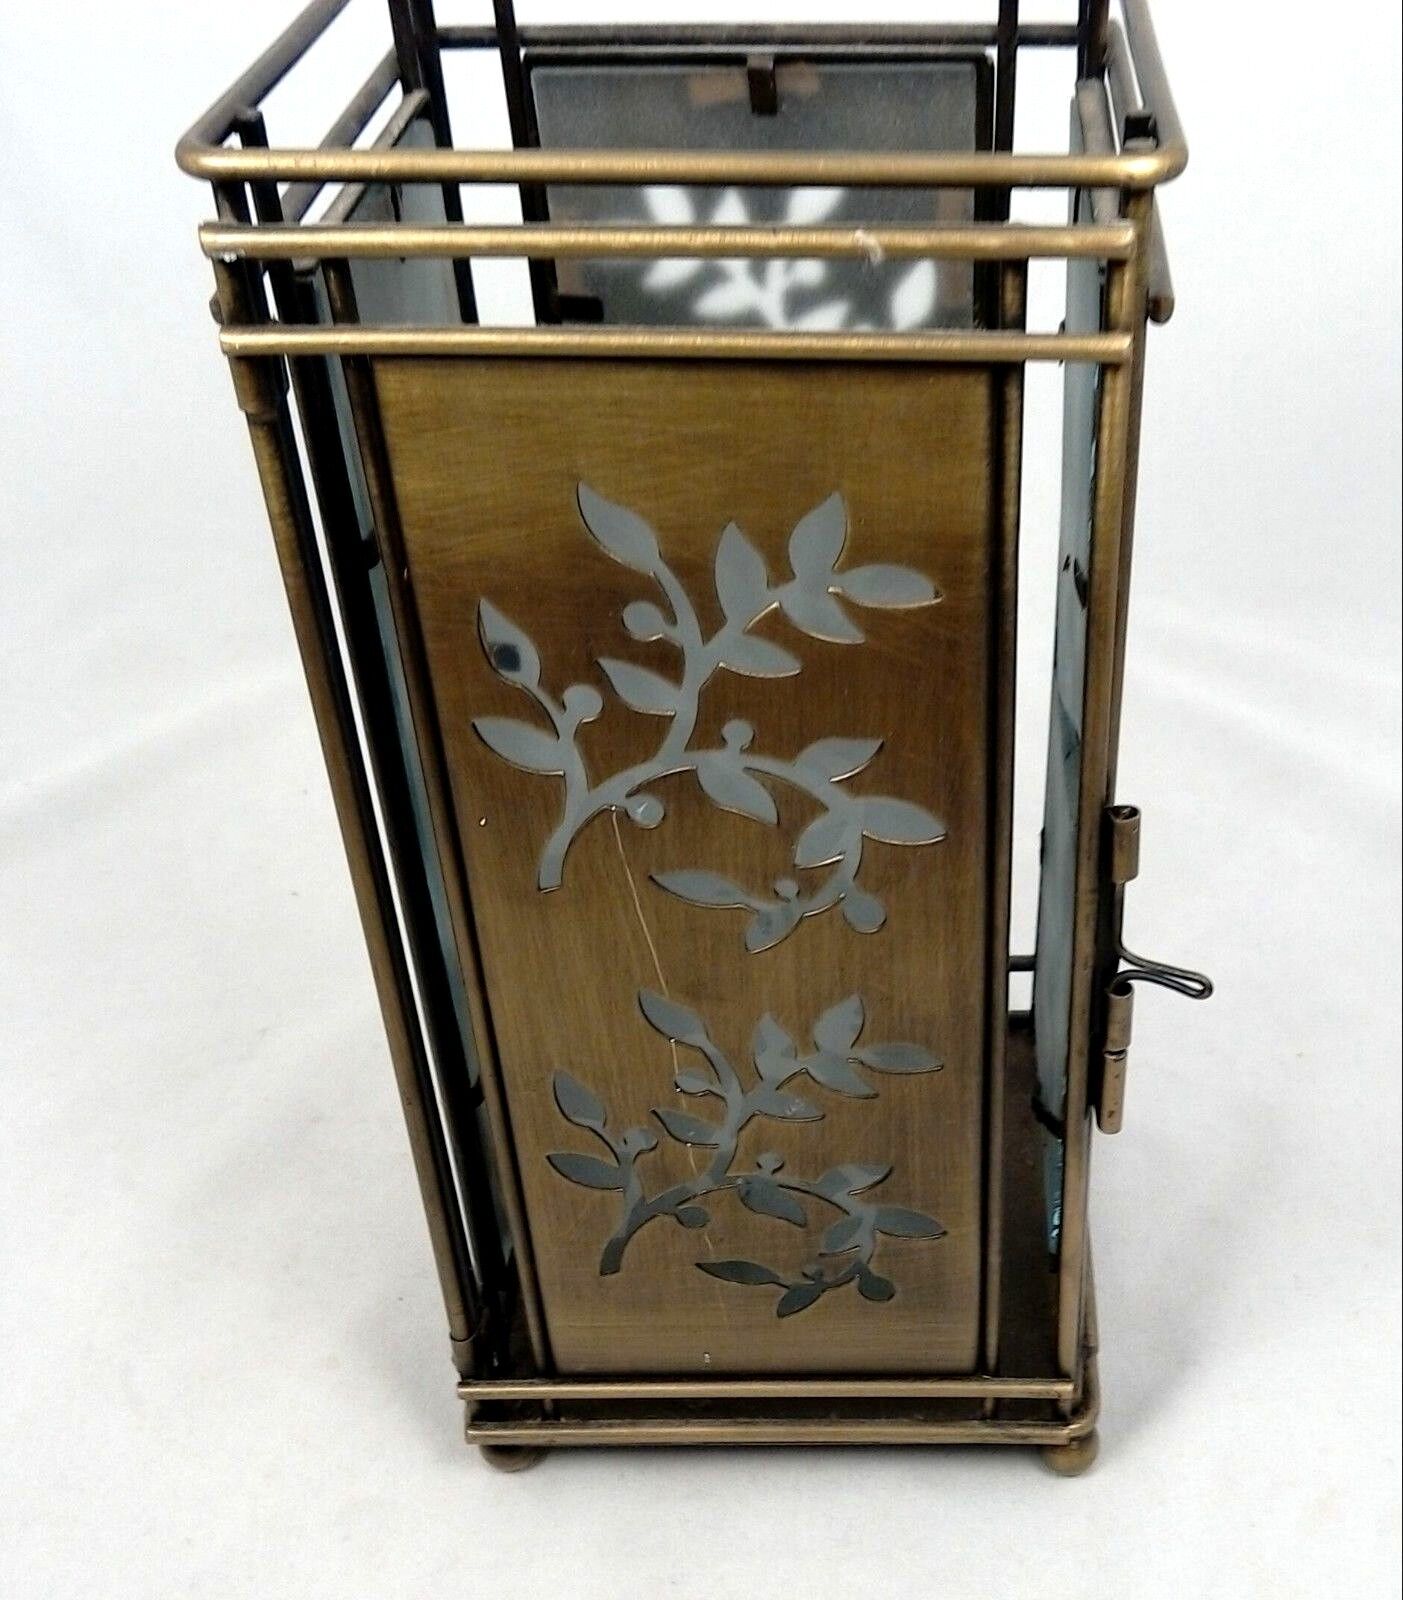 Beautiful Decorative Gold Tone Square Plant Image Candle Holder